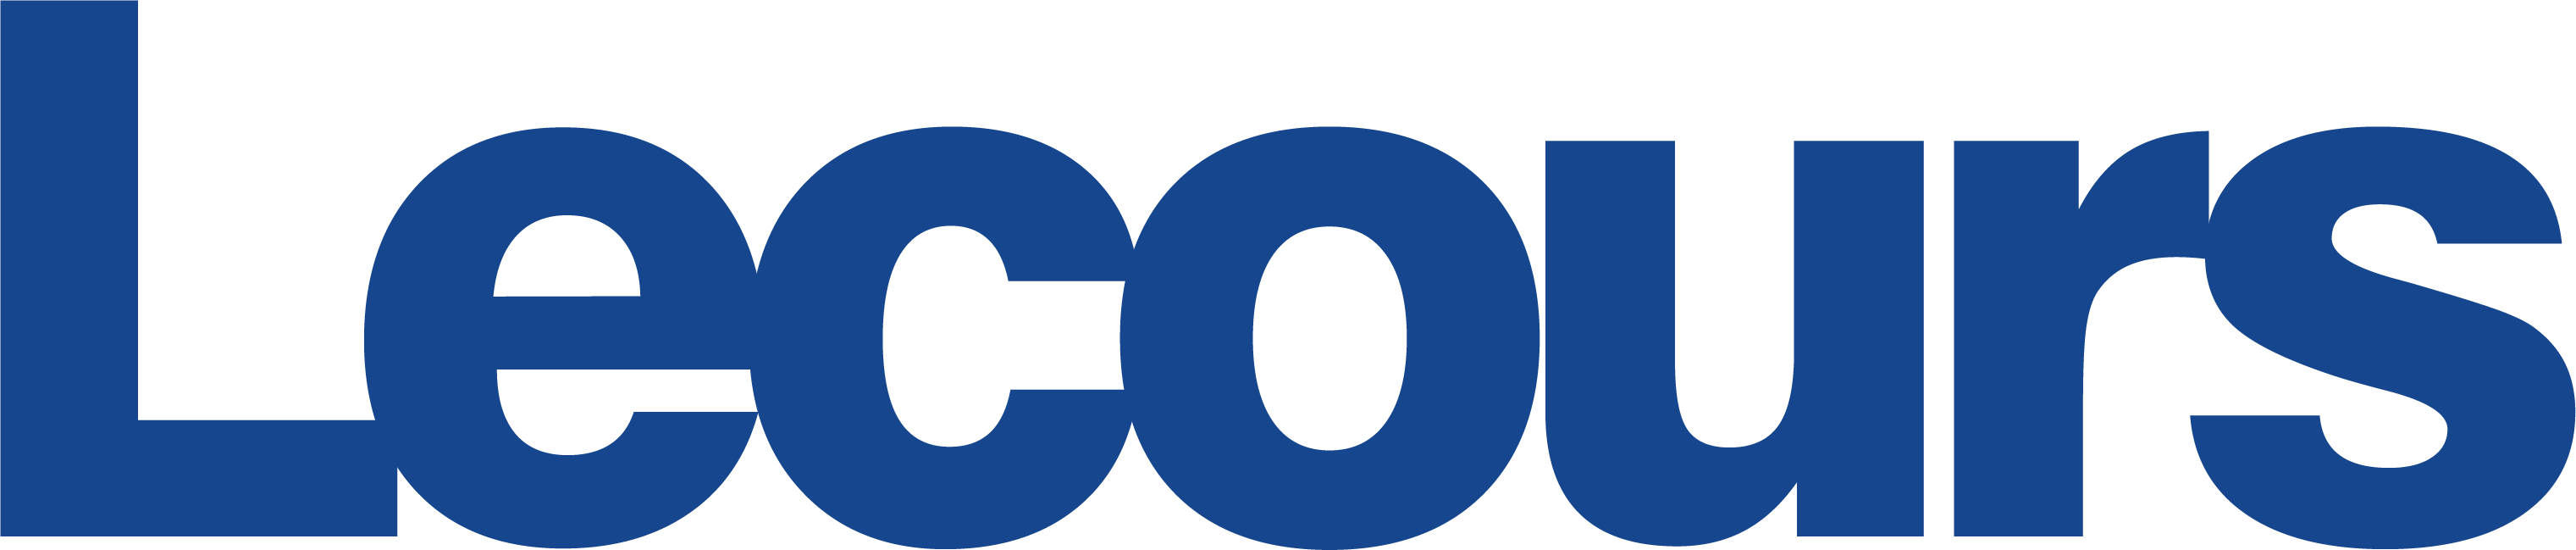 Lecours-Logo-Dark-Blue